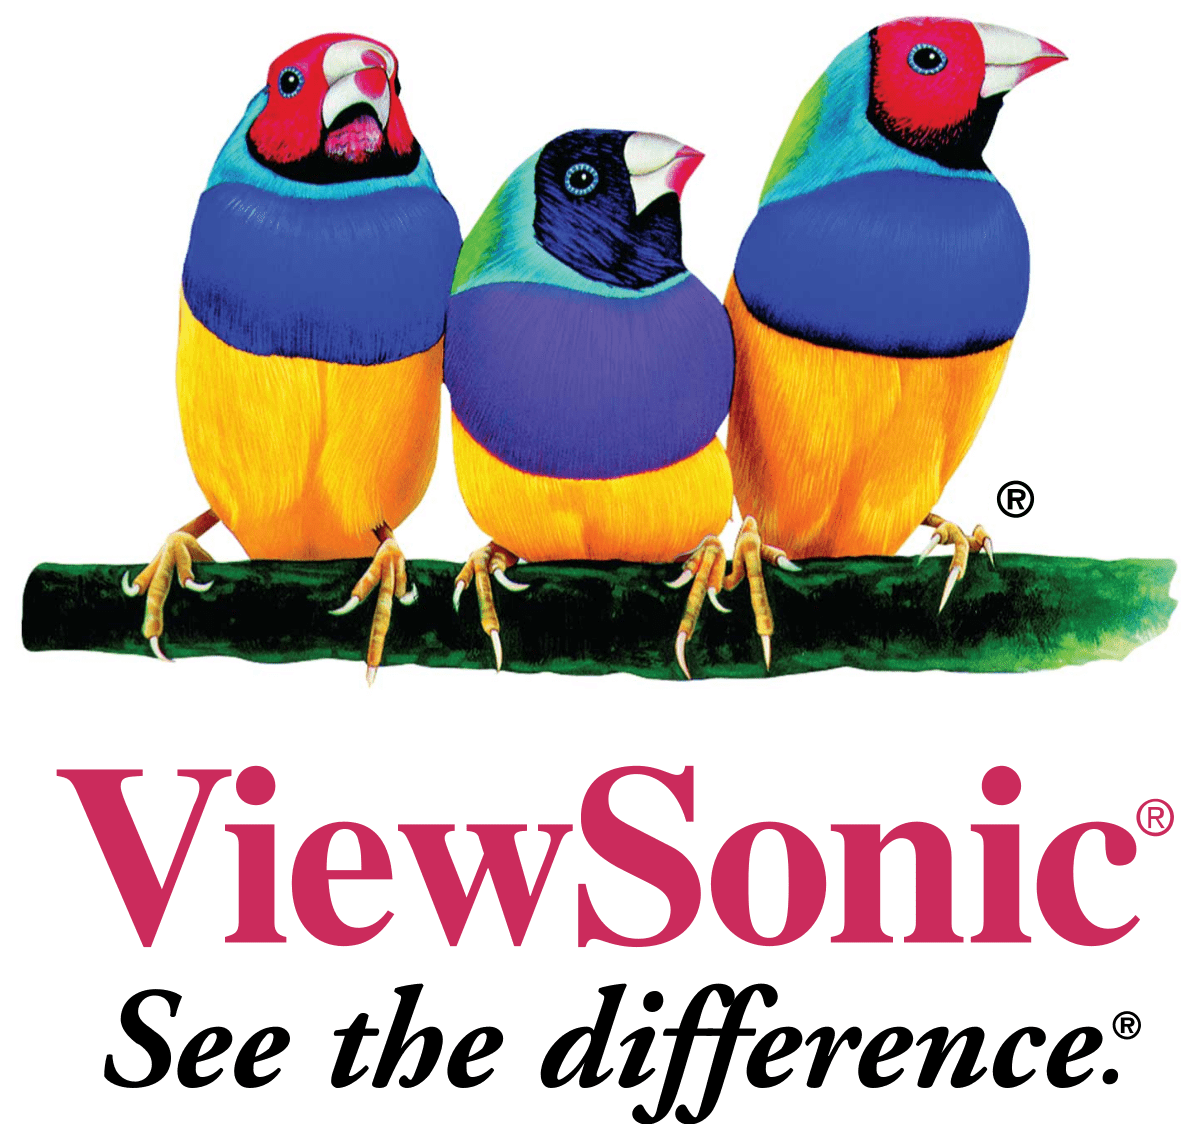 ViewSonic Transparent Logo PNG